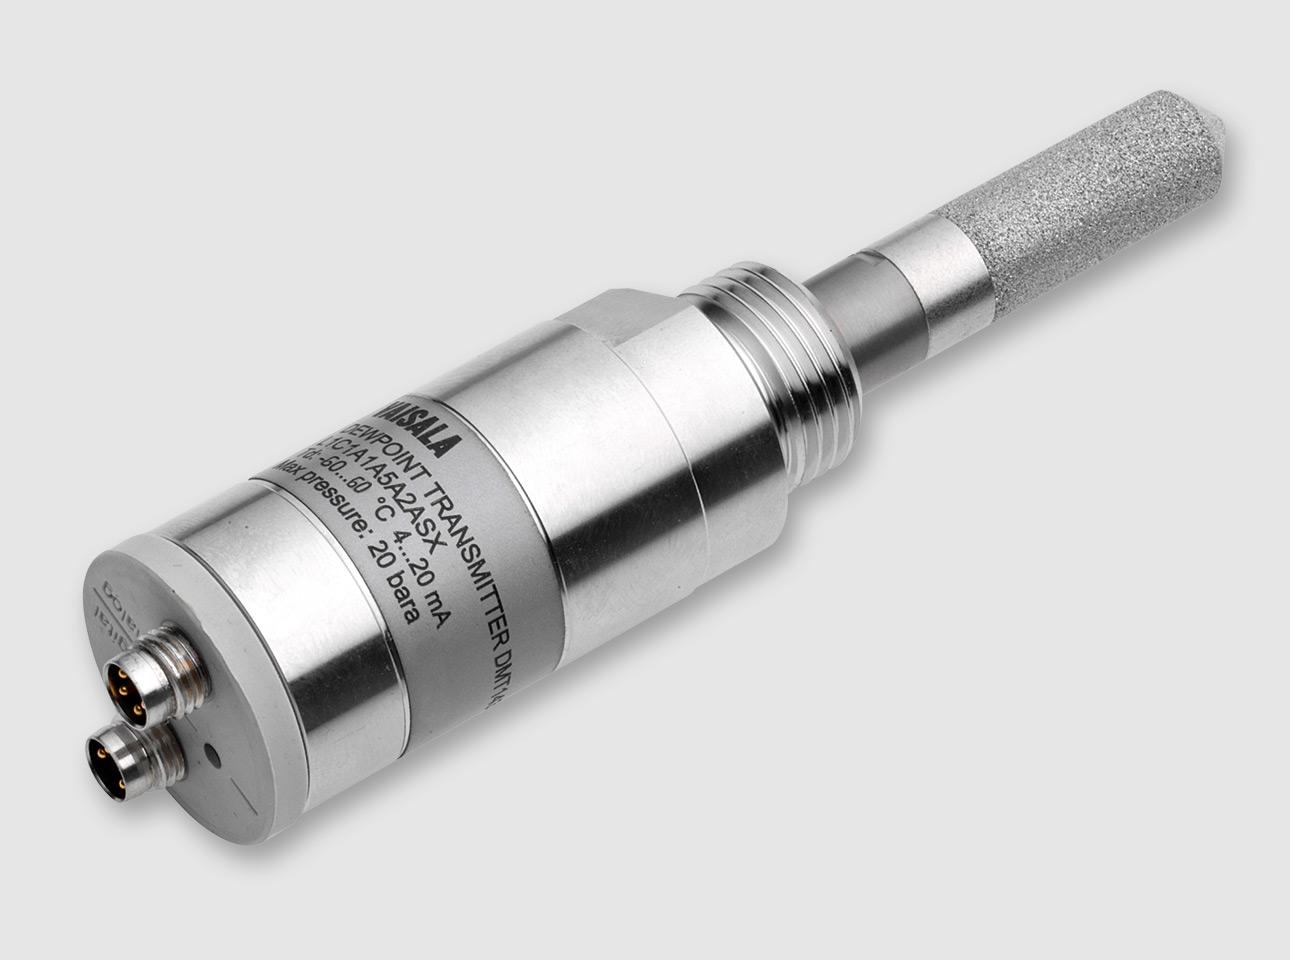 The Vaisala DRYCAP® Dewpoint Transmitter DMT143 is a miniature dew point measurement instrument 